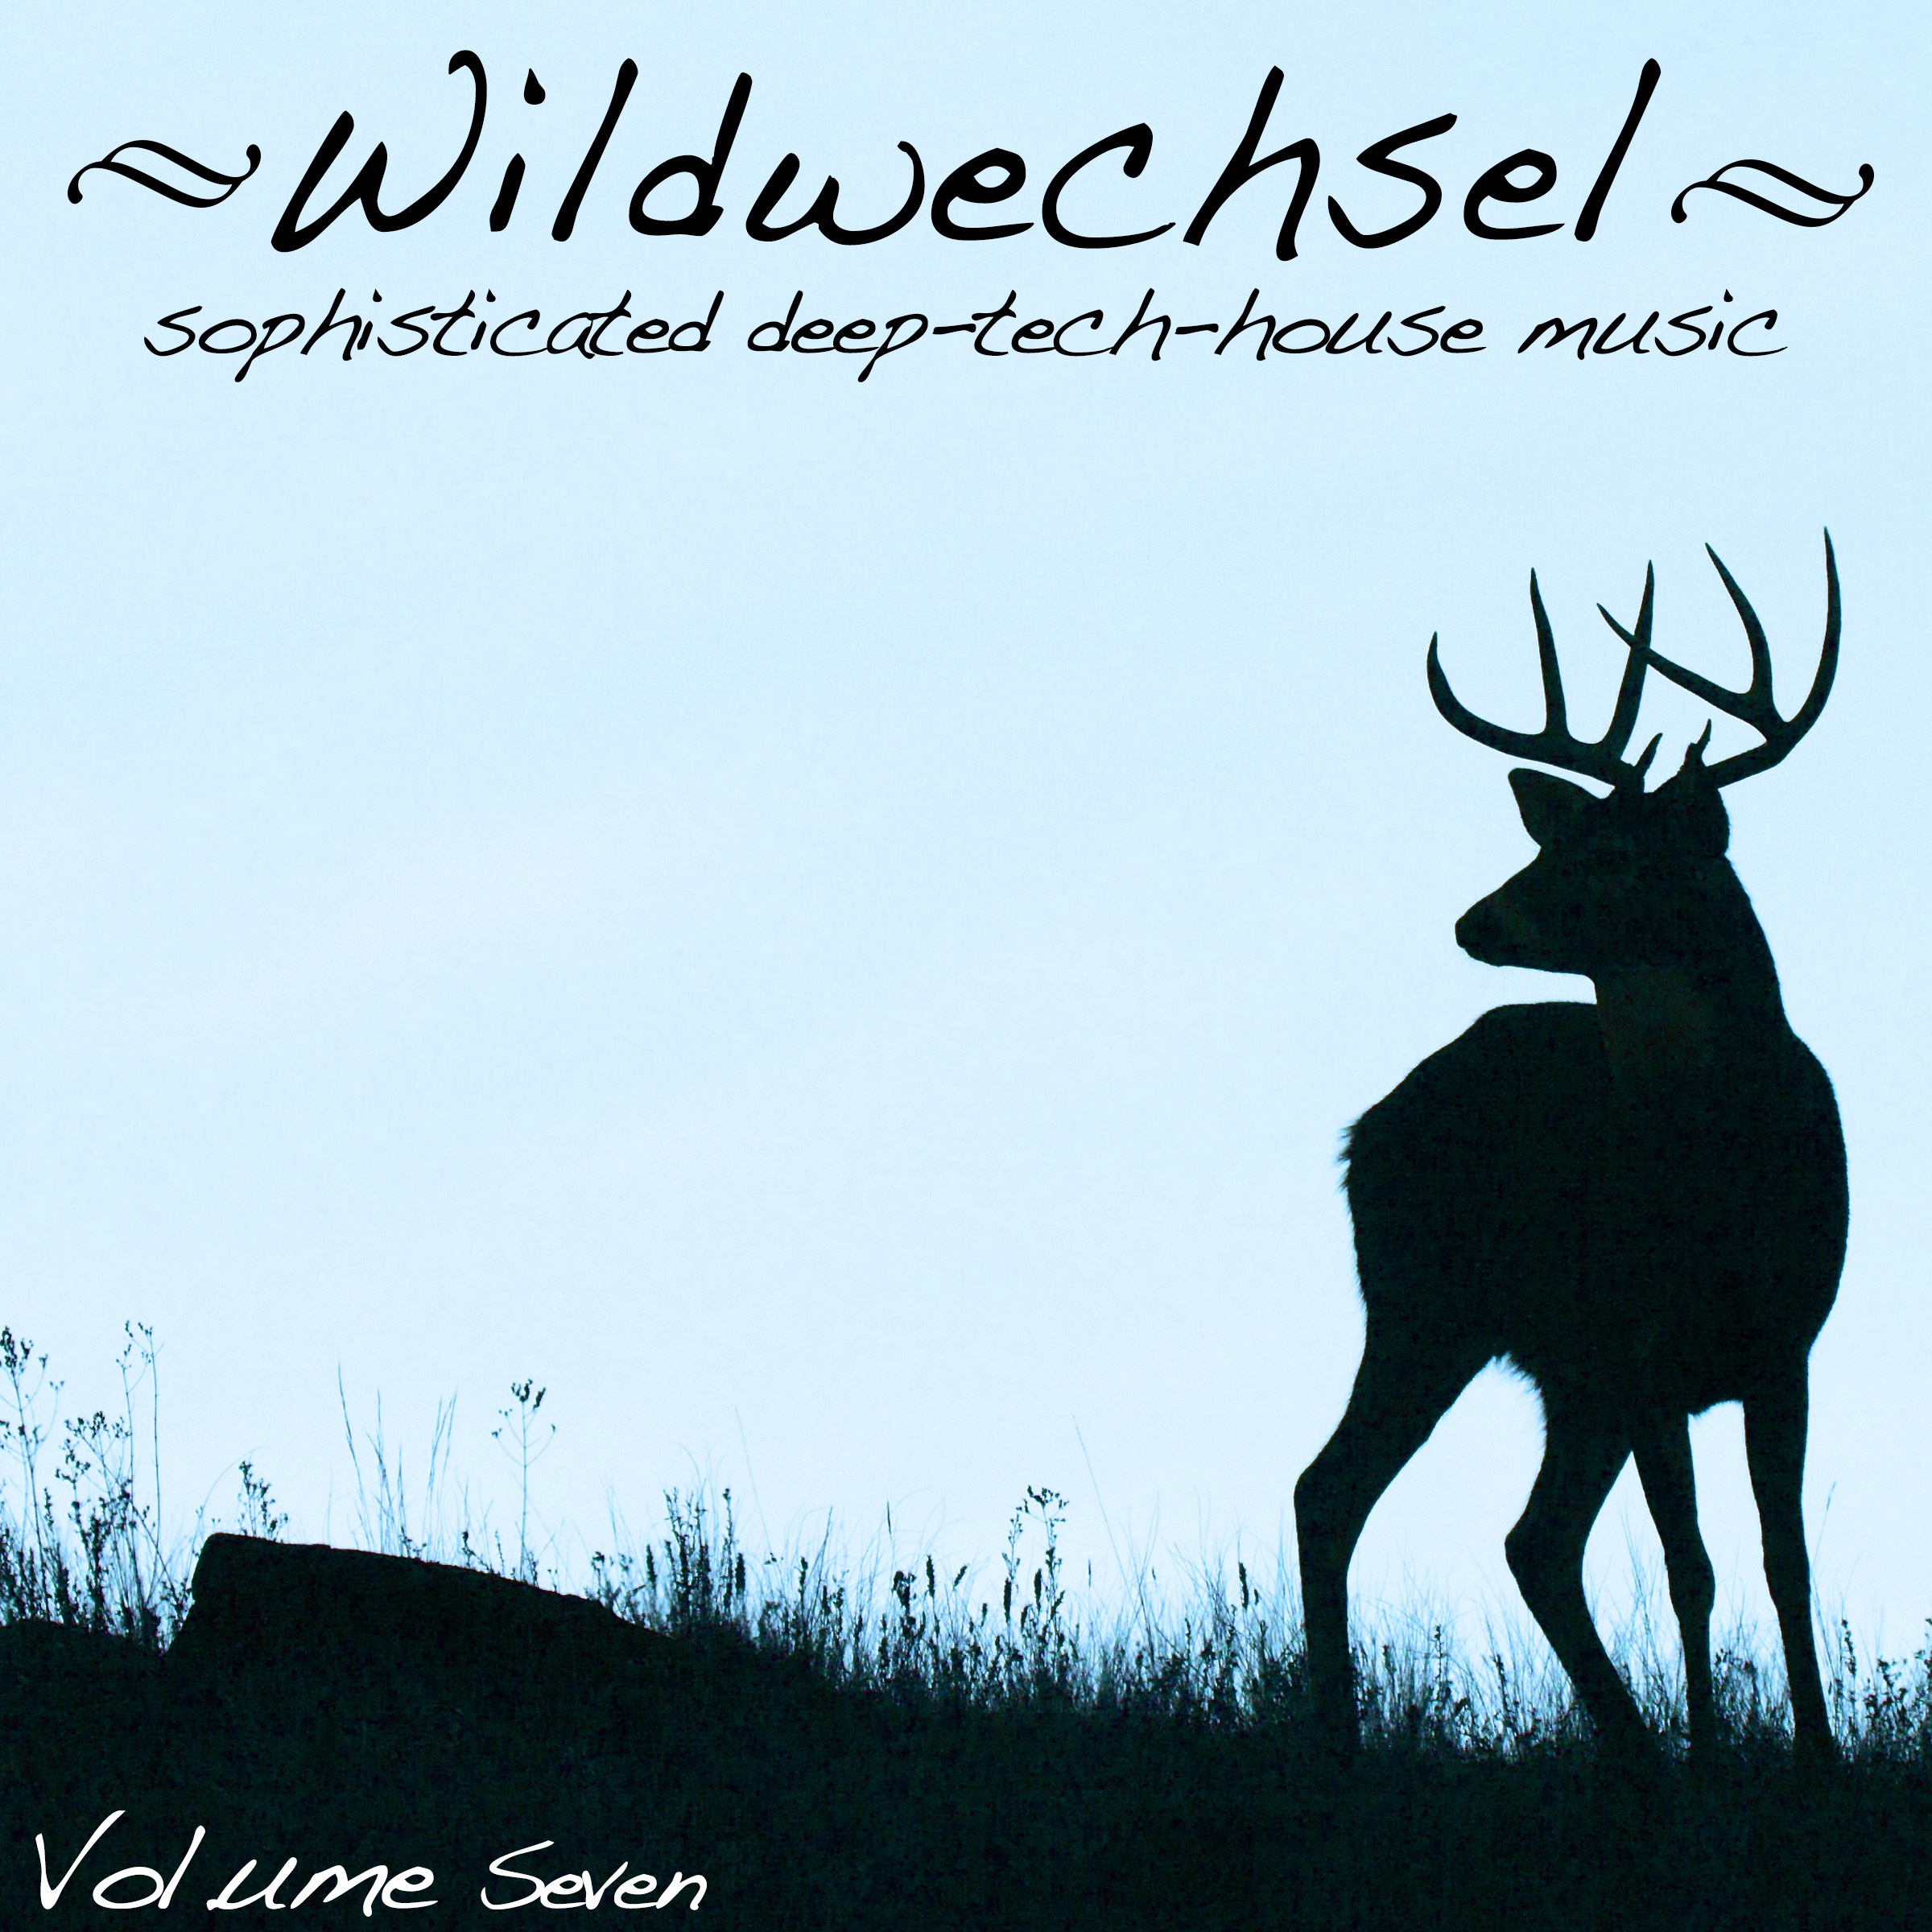 Wildwechsel, Vol. 7 - Sophisticated Deep Tech-House Music